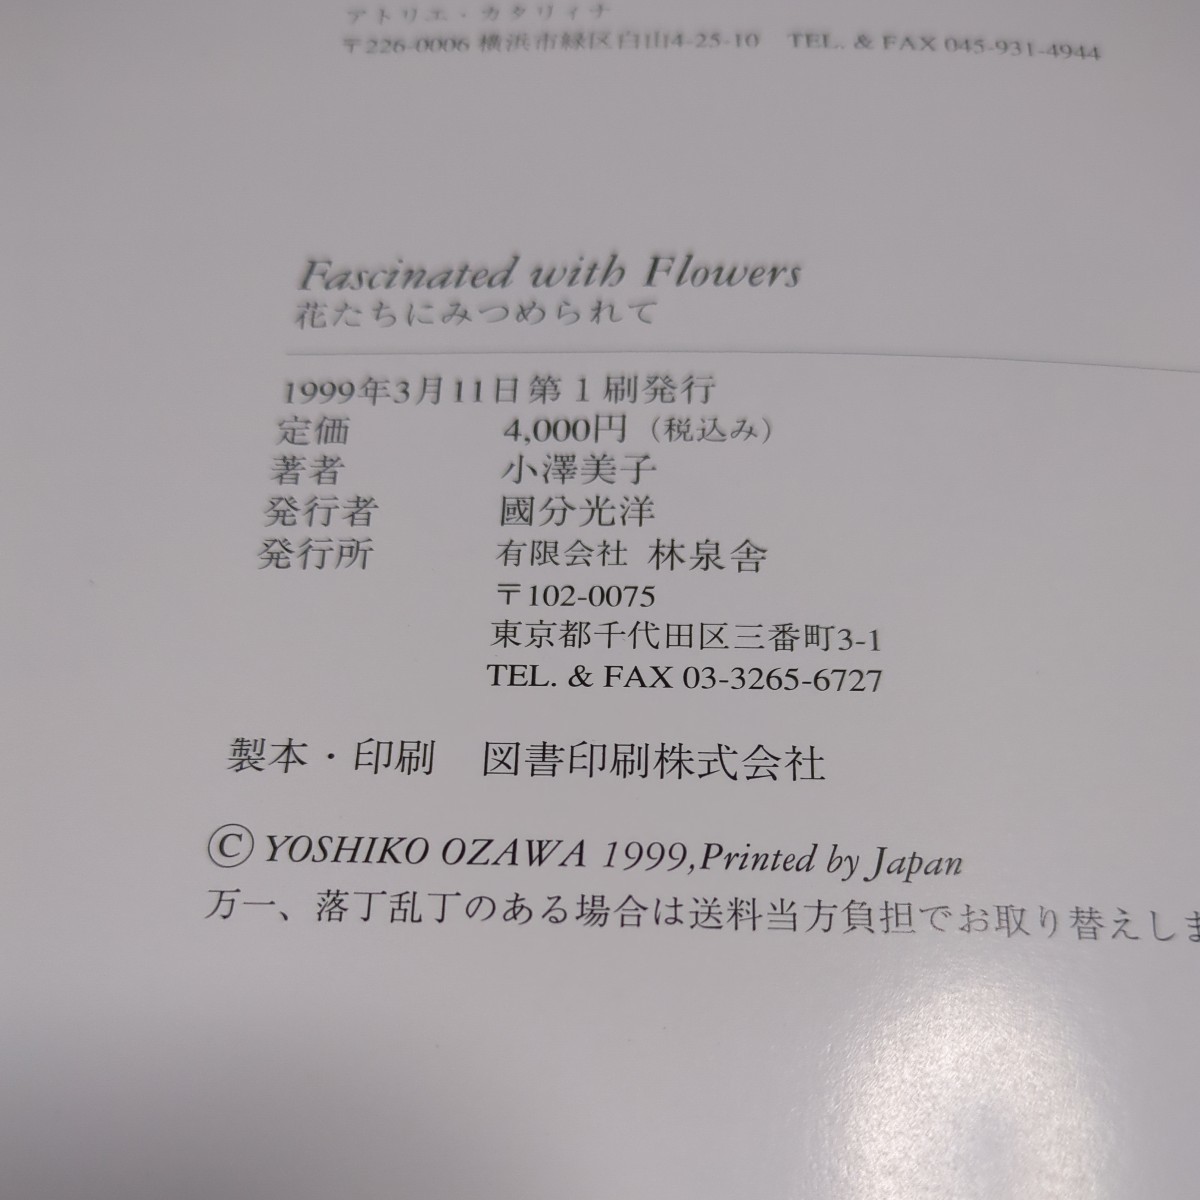 Fascinated with Flowers 花たちにみつめられて 小澤美子 林泉舎 1999年第1刷 アトリエ・カタリィナ ポーセリン・ペインティング 作品集